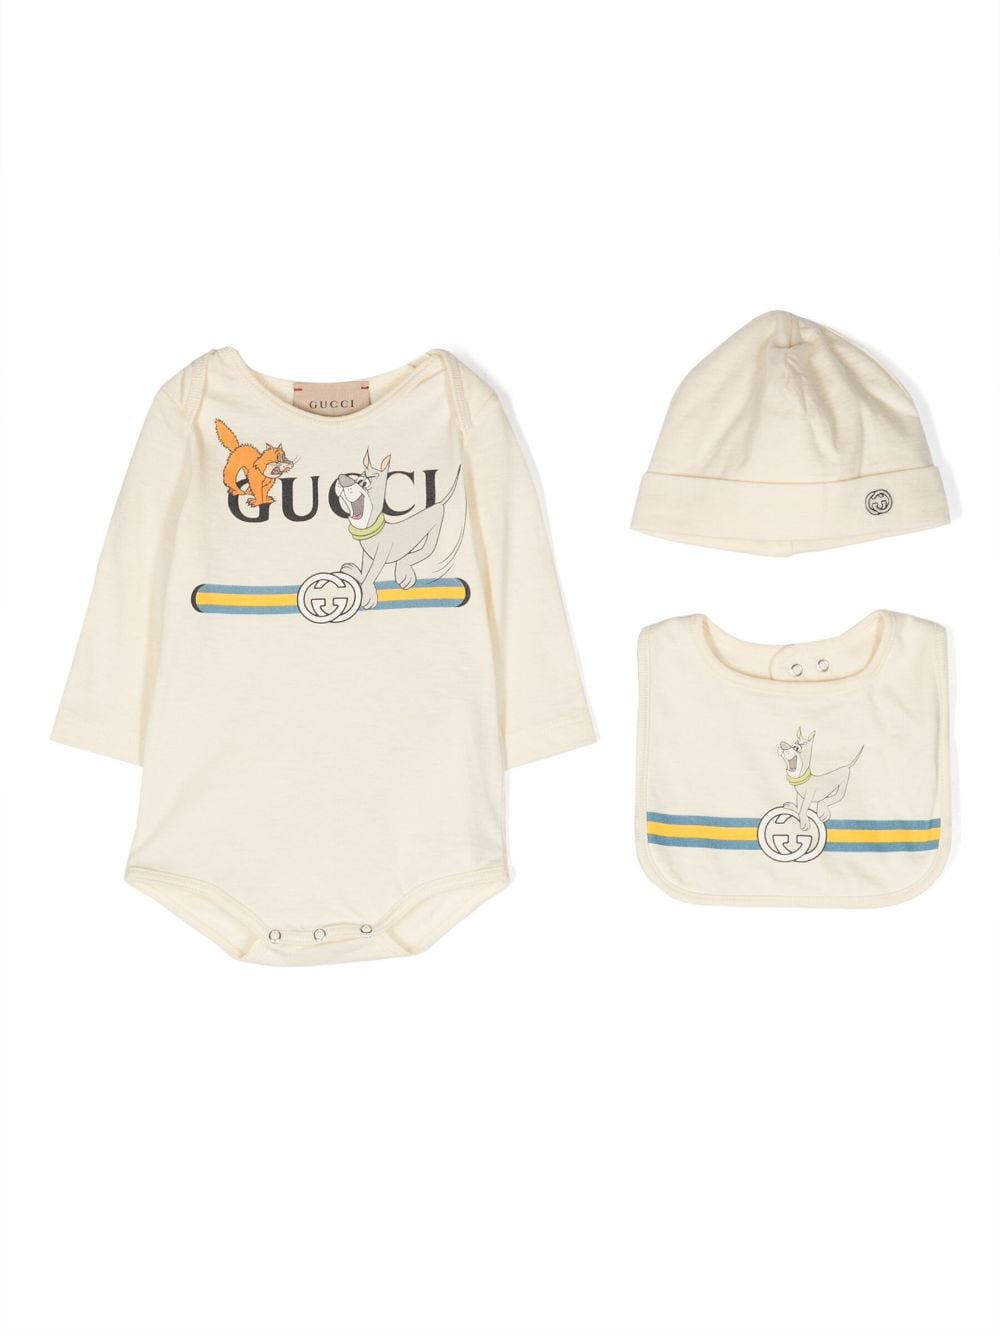 Gucci Kids x The Jetsons© Bodysuit Set - Farfetch